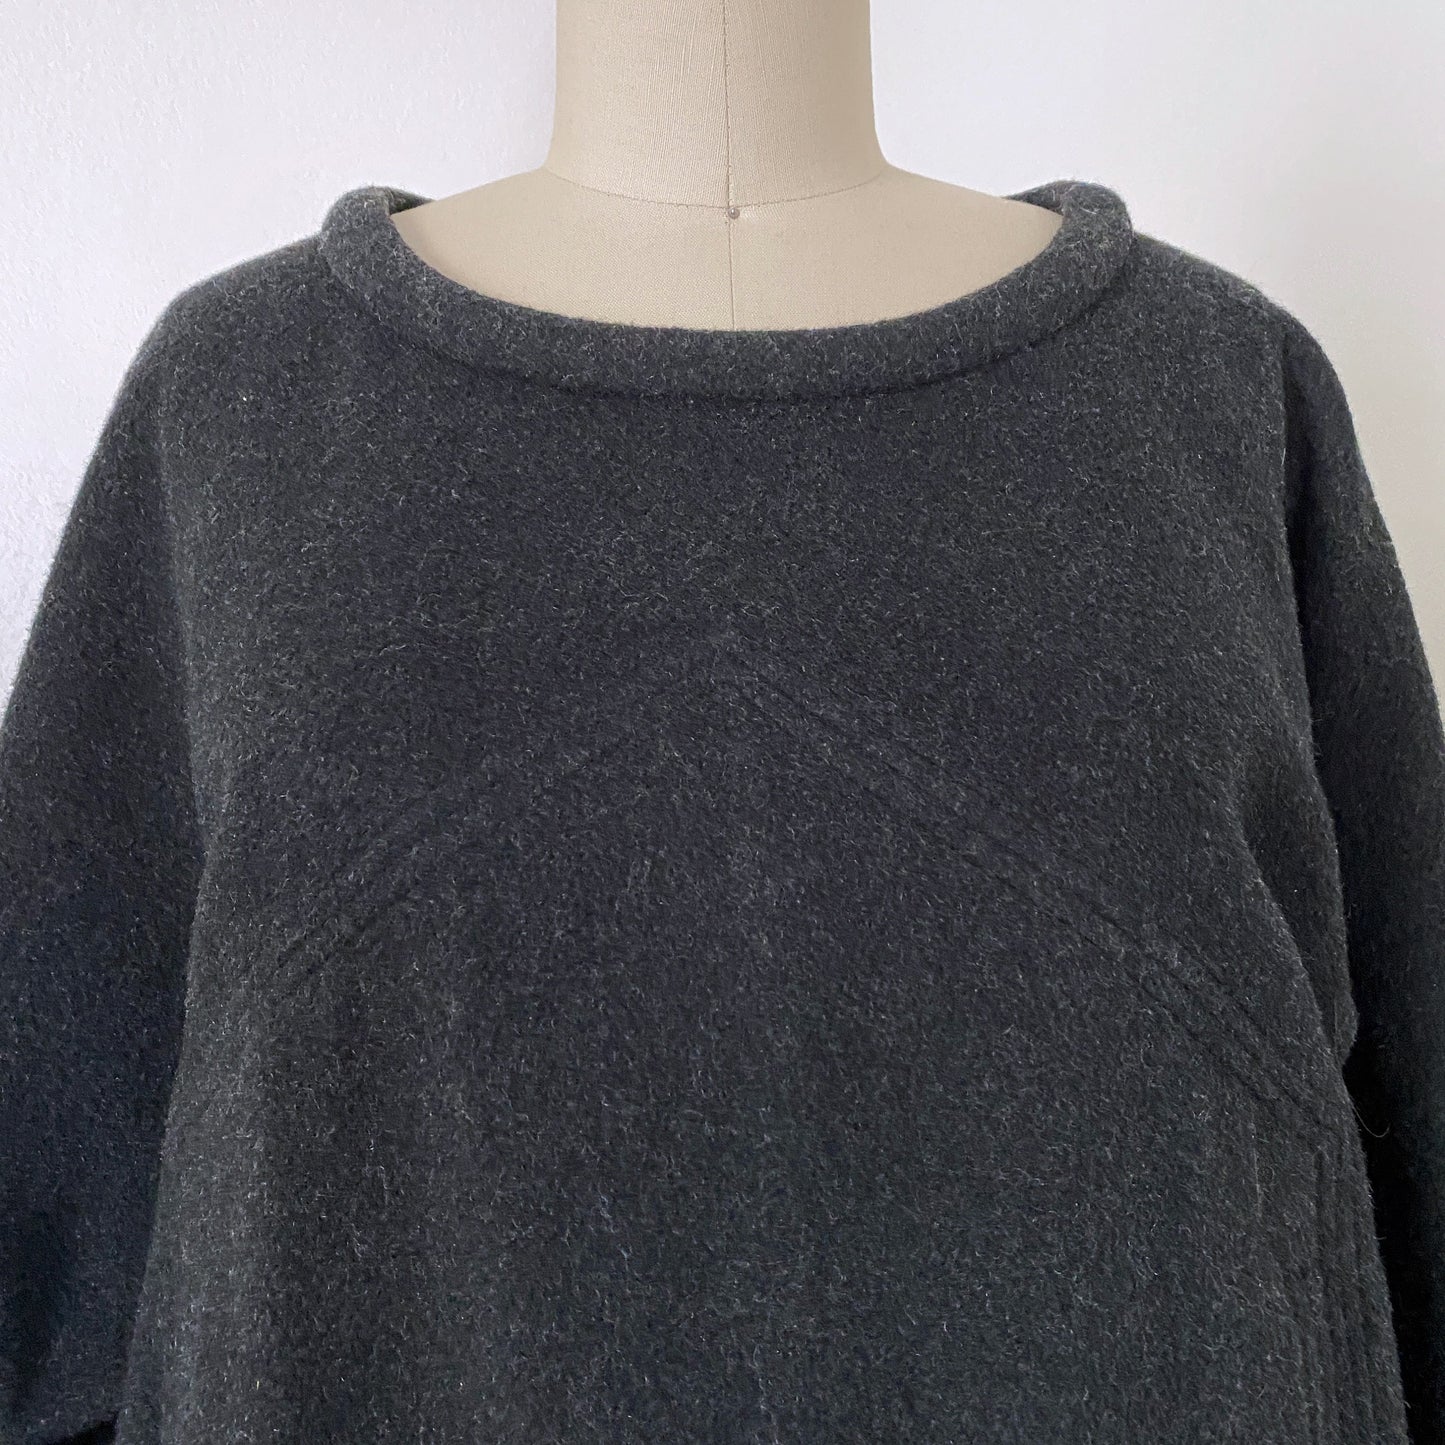 1970s JOAN VASS Wool Felt Pullover Sweater Minimalist Charcoal Boxy Top MED/Lg